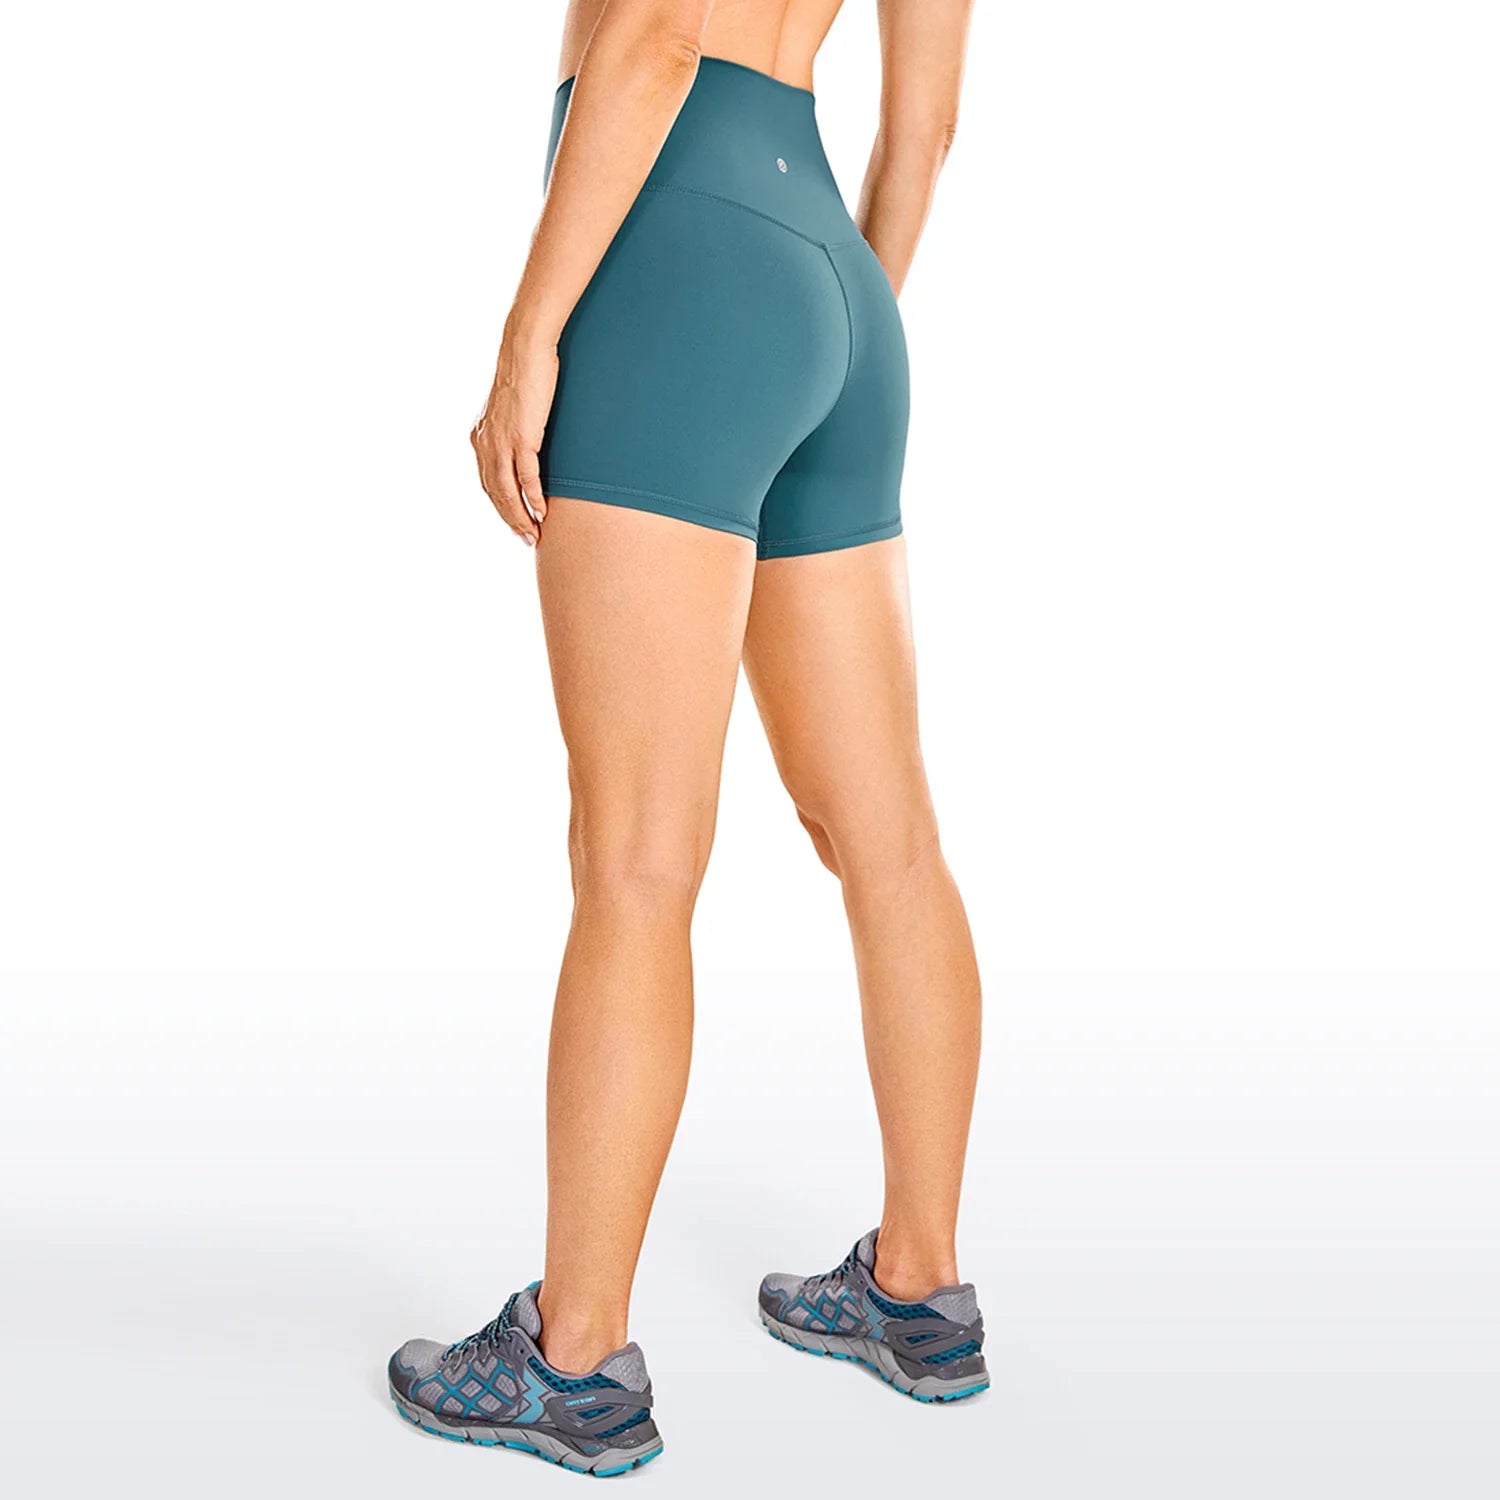 Canmol High Waist Biker Shorts 4" - Women's Naked Feeling Yoga Running Shorts